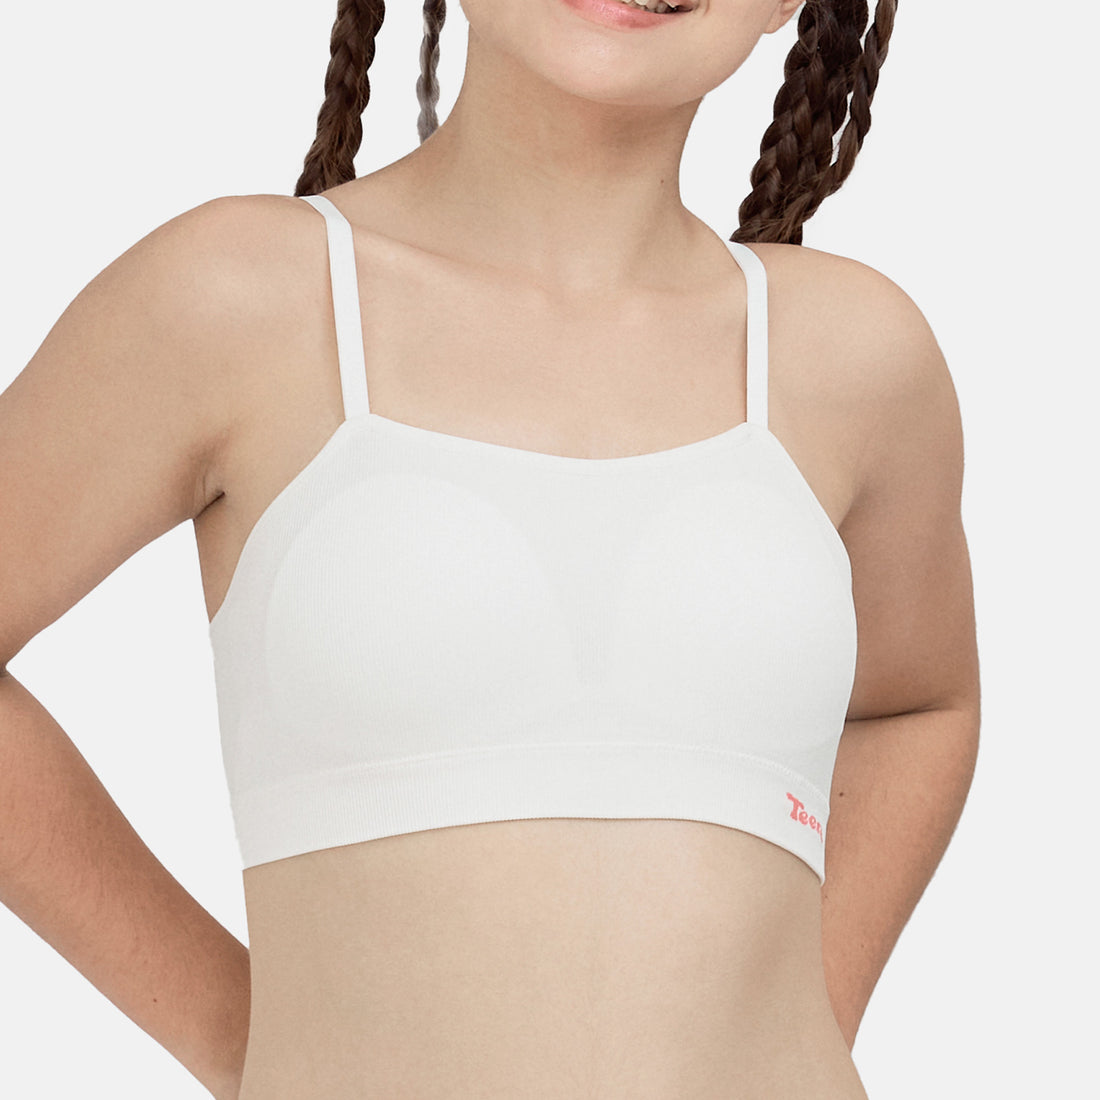 Wacoal Teen Bikini Panty Underwear for teenagers Model MUT305 Gray (GY)